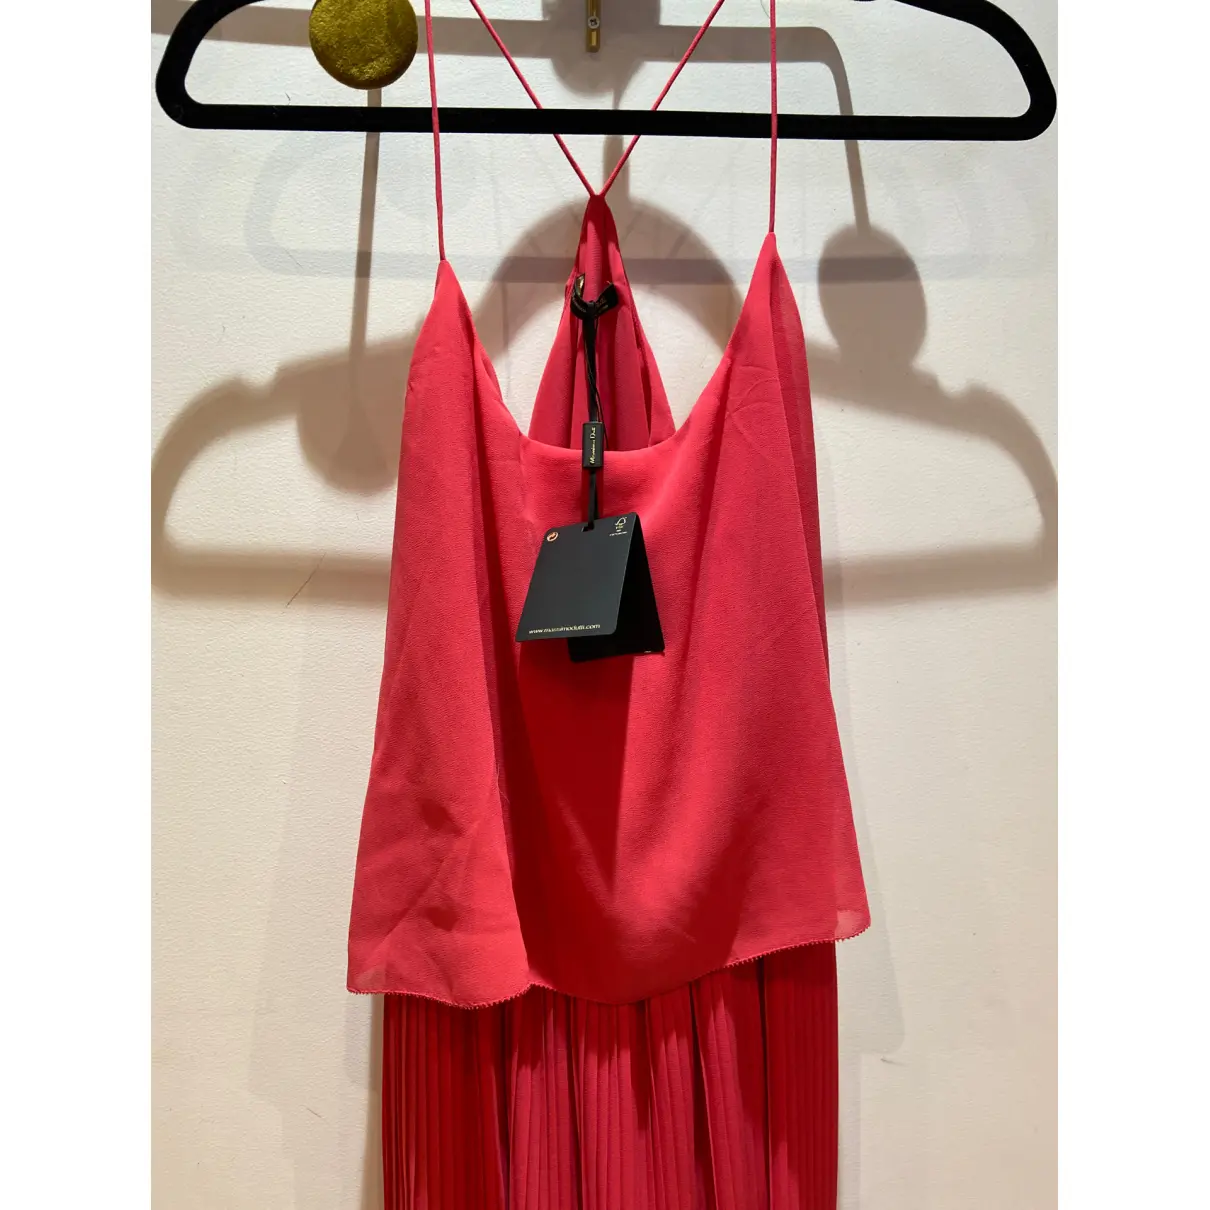 Buy Massimo Dutti Maxi dress online